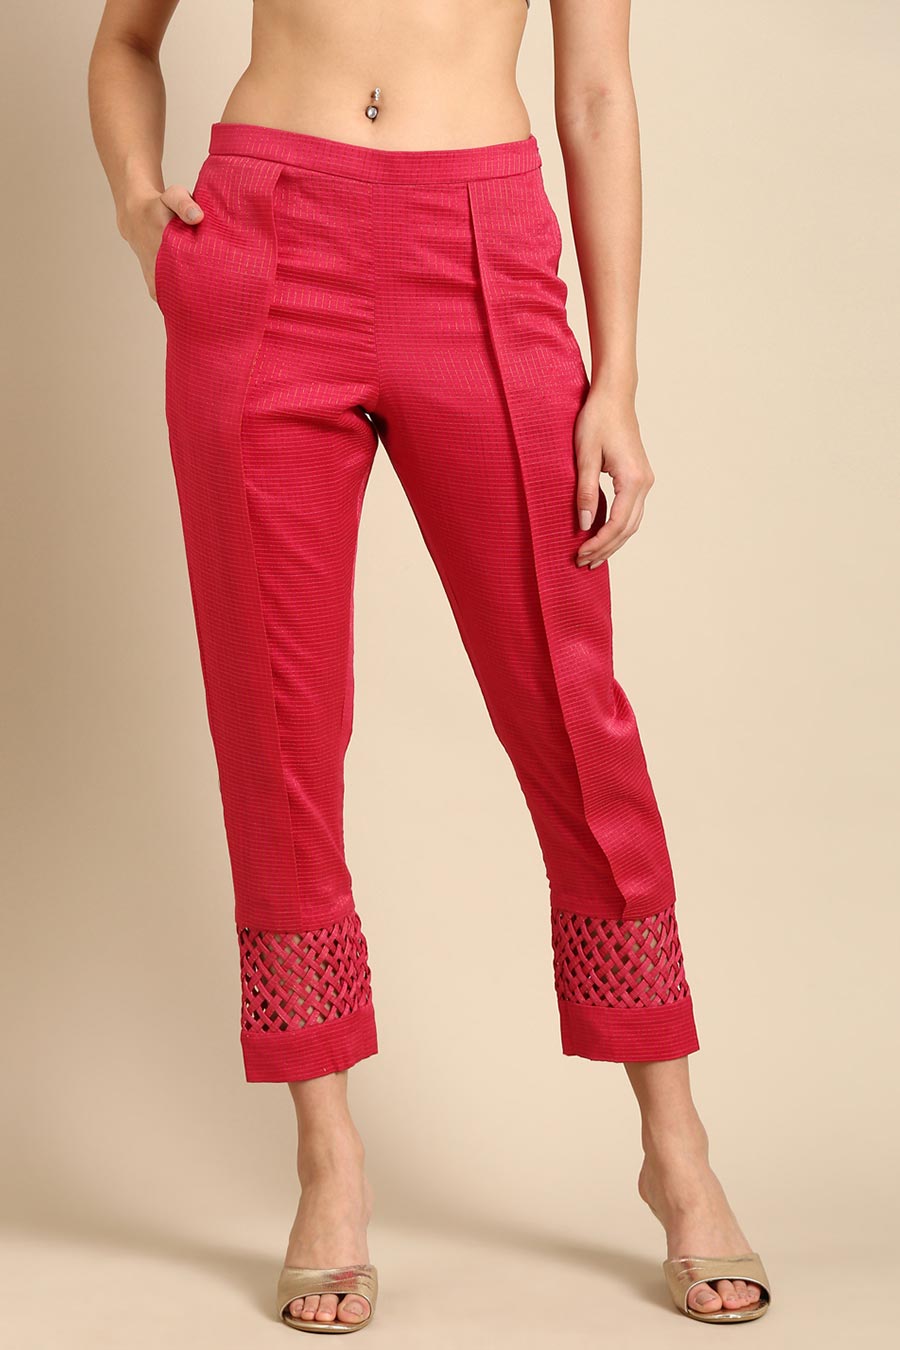 goa fashion designers | designer trousers for ladies